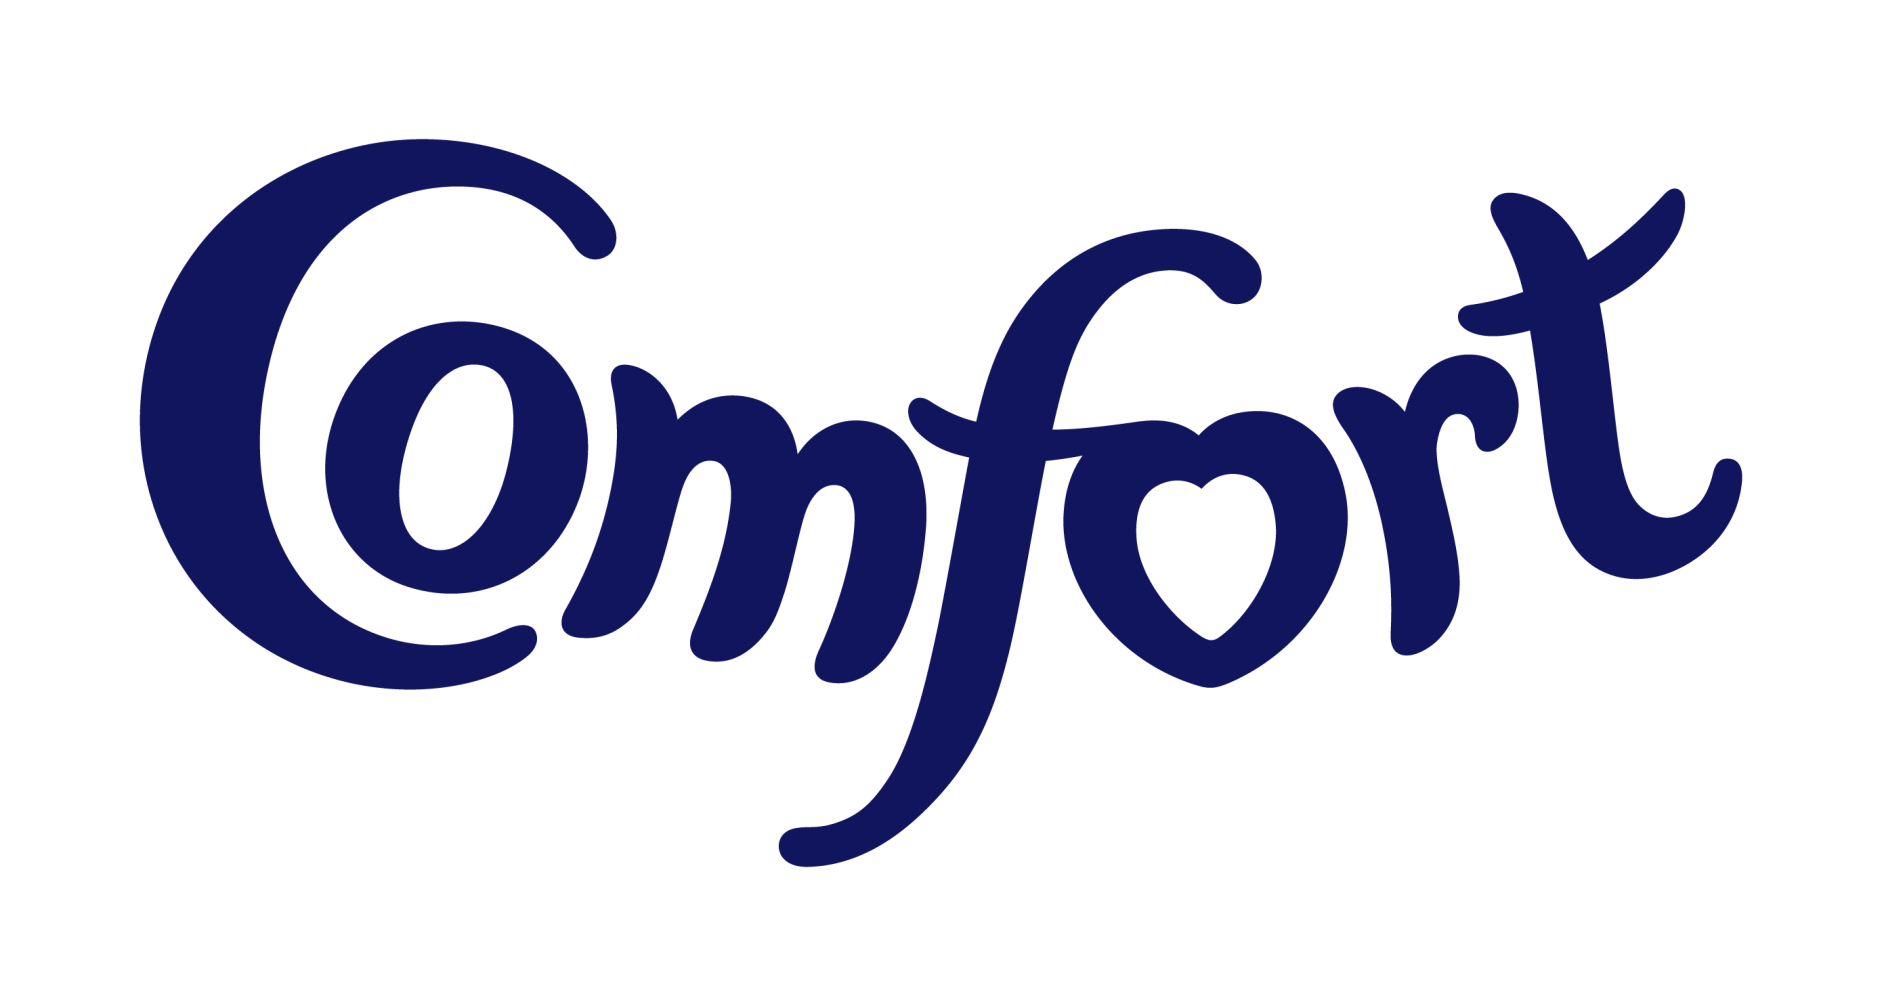 Comfort Logo - Comfort | Logopedia | FANDOM powered by Wikia